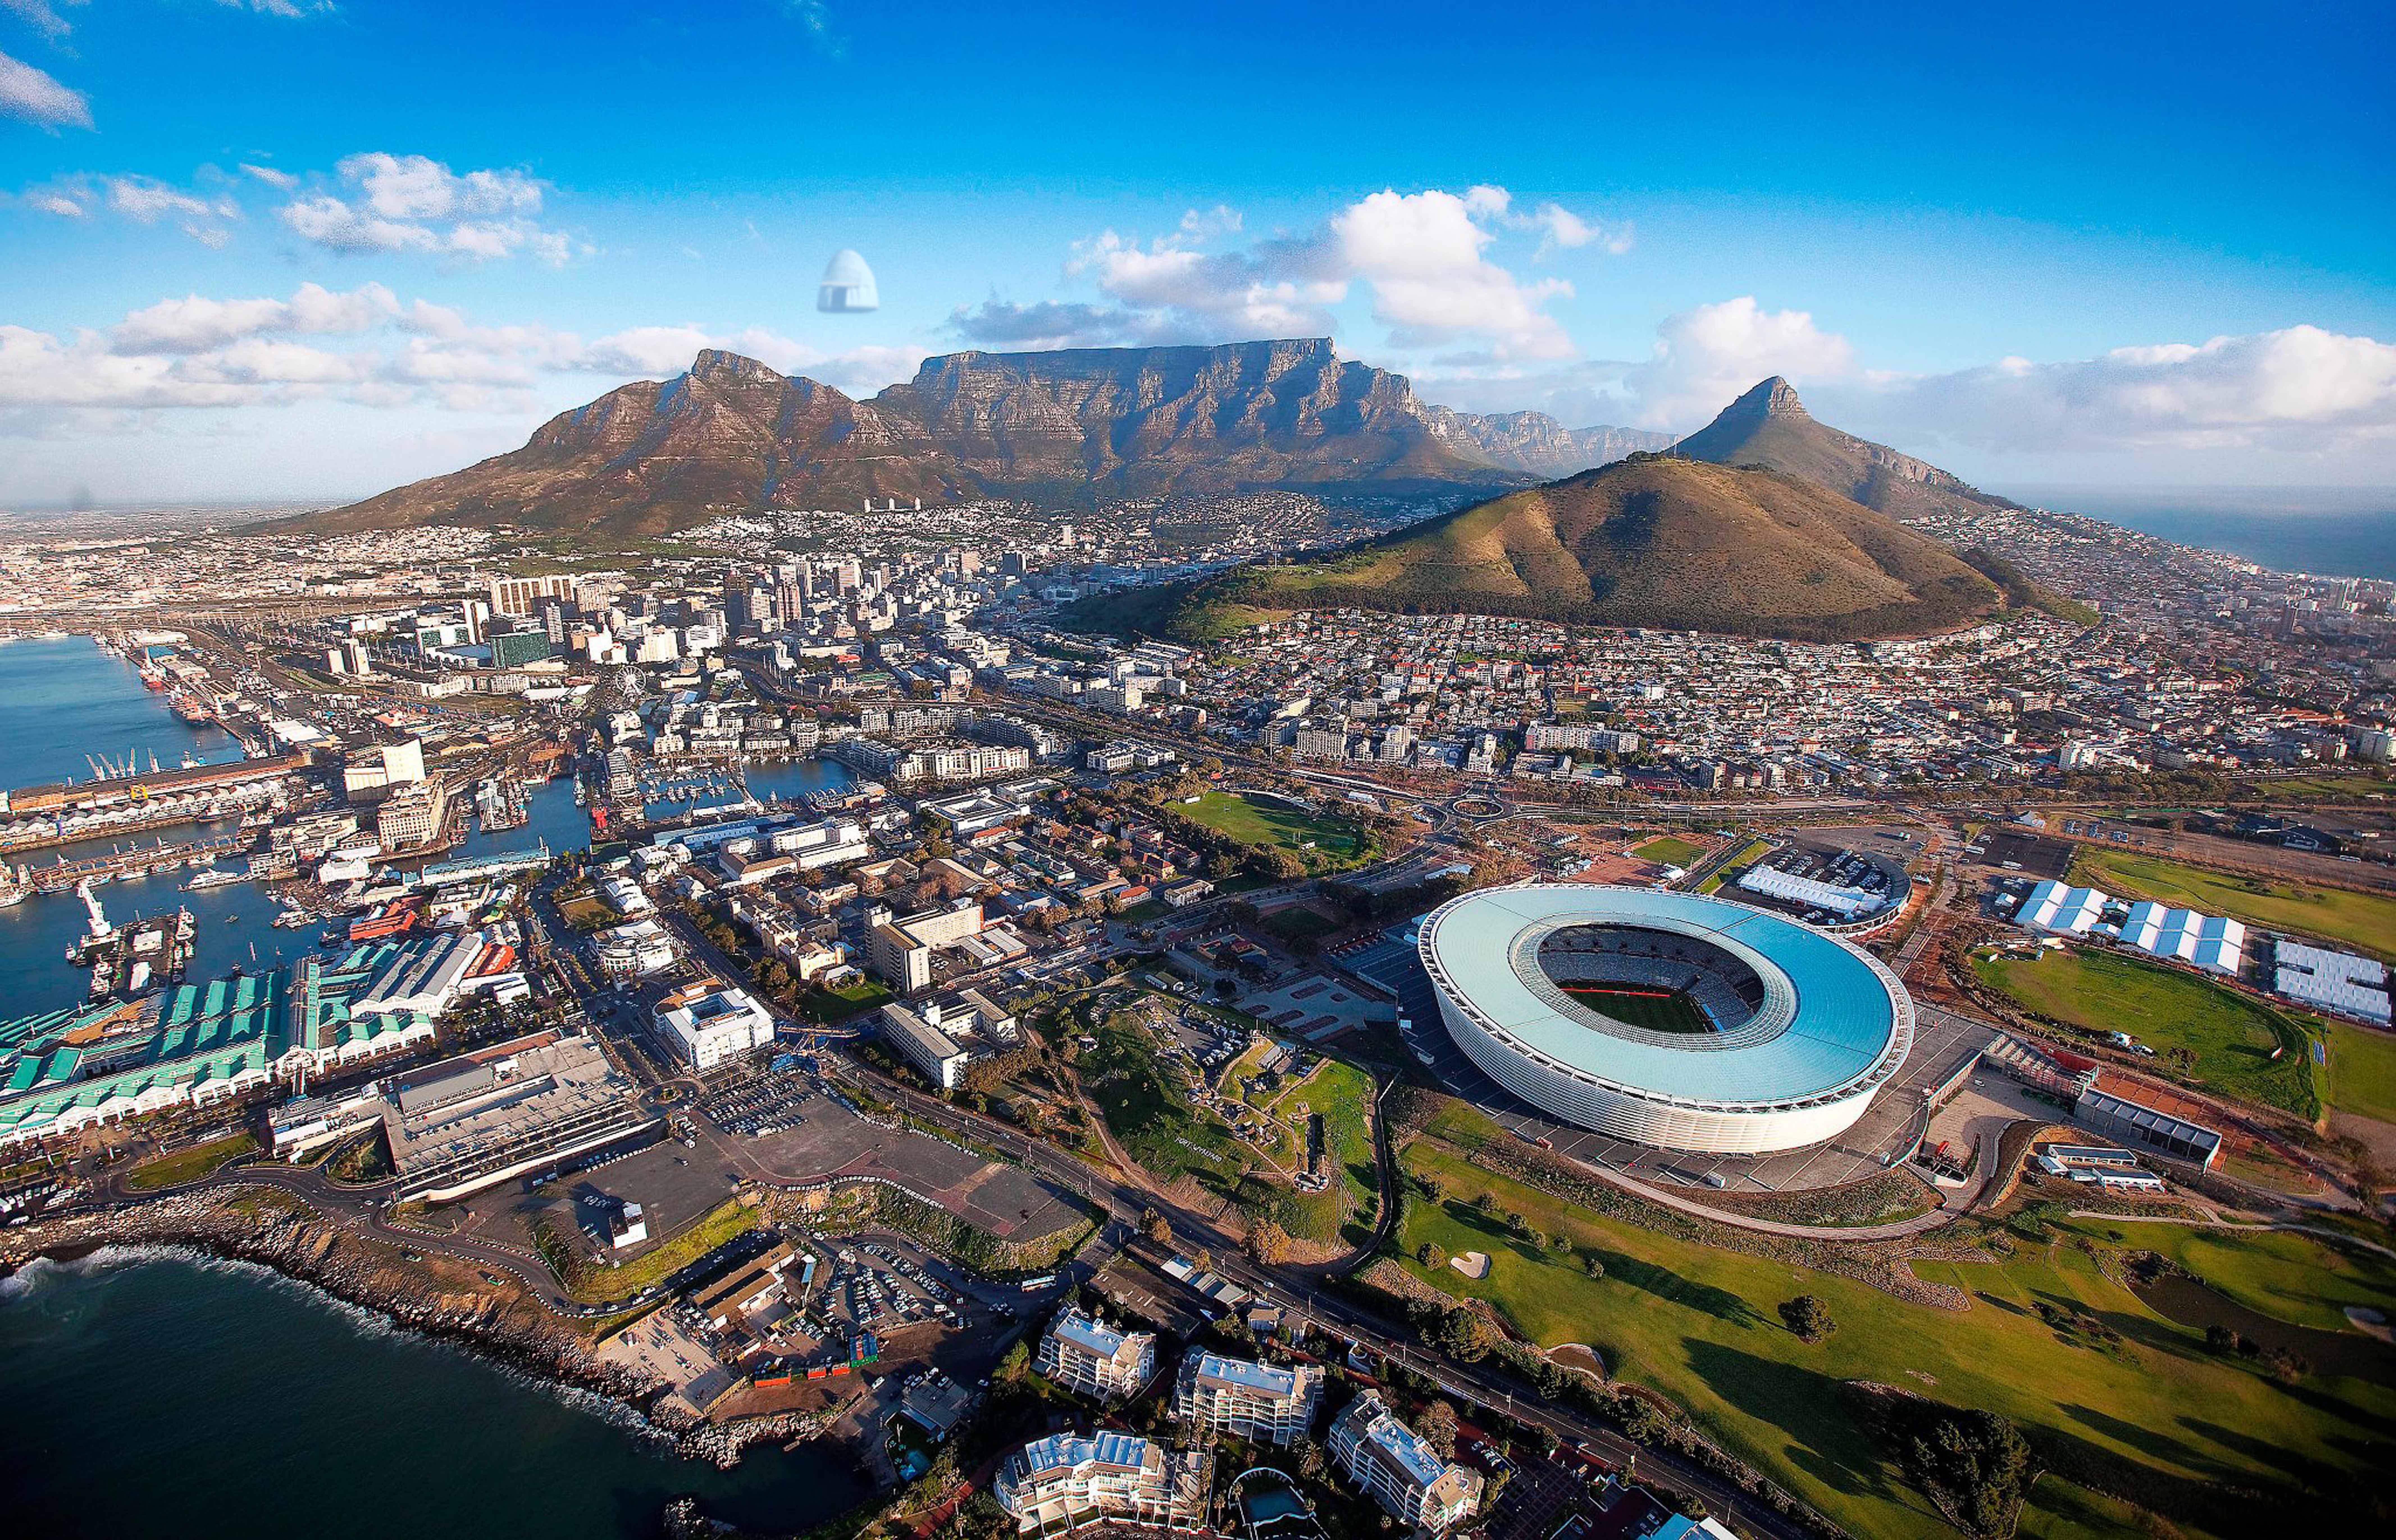 HD Cape Town Wallpaper and Photo. HD City Wallpaper